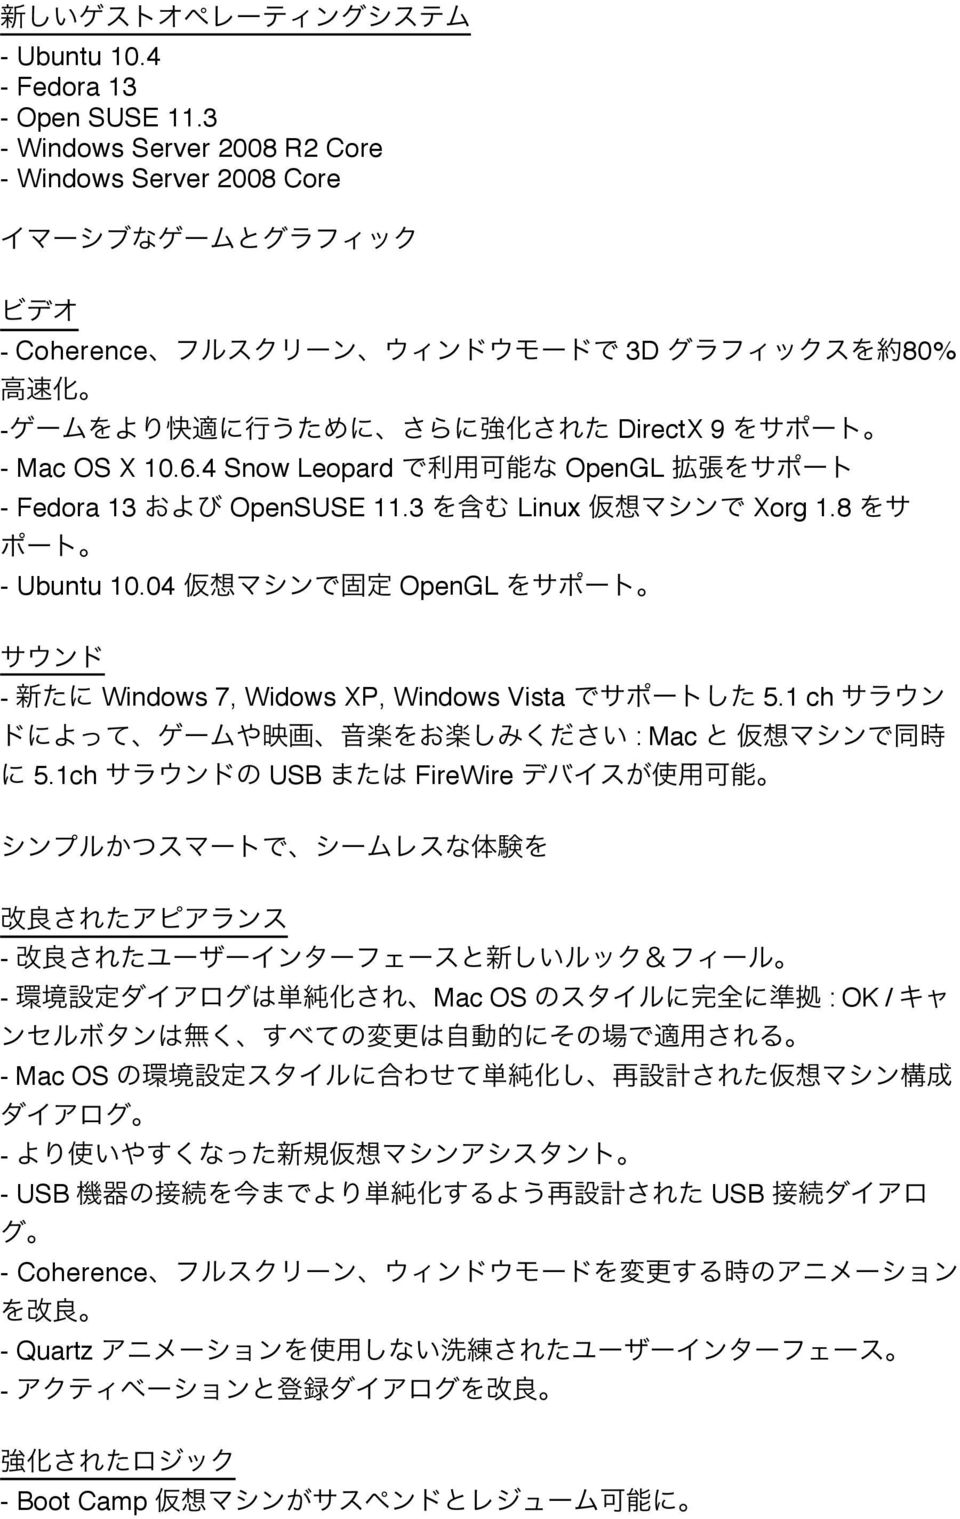 Mac OS X 10.6.4 Snow Leopard OpenGL - Fedora 13 OpenSUSE 11.3 Linux Xorg 1.8 - Ubuntu 10.